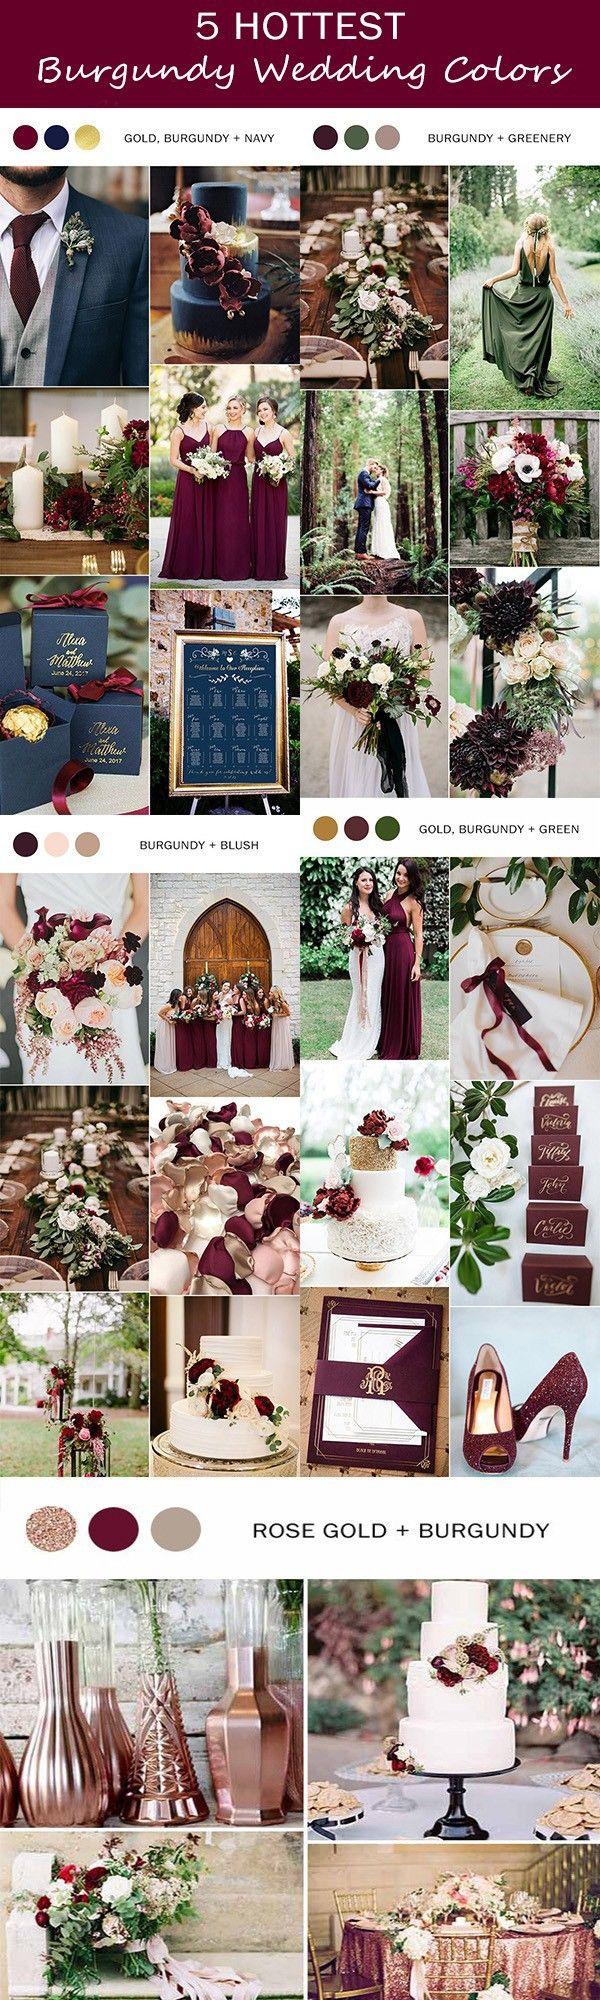 زفاف - Trending-5 Perfect Burgundy Wedding Color Ideas To Love